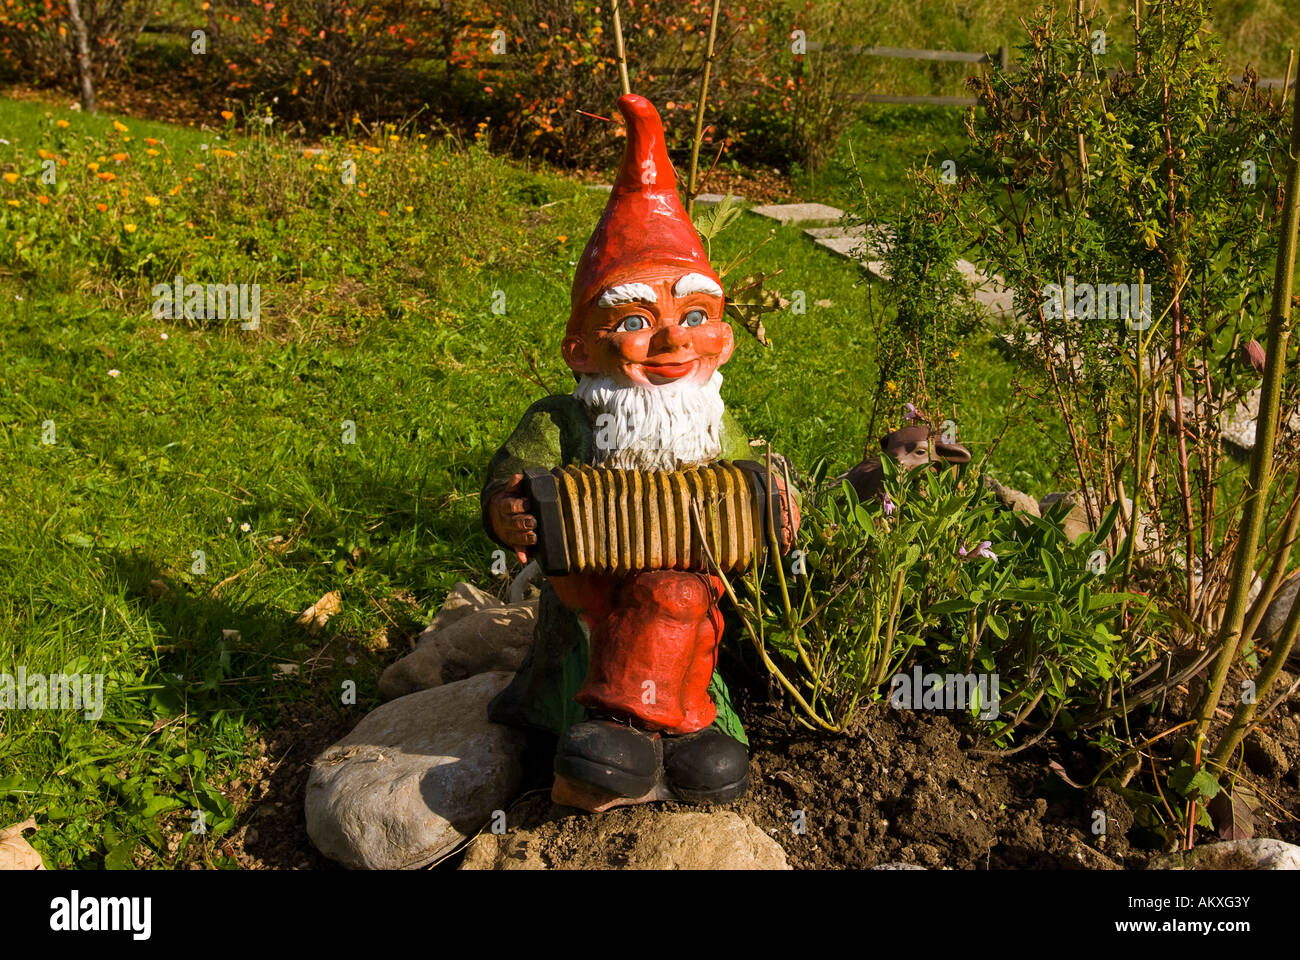 Garden gnome, Tyrol, Austria Stock Photo - Alamy